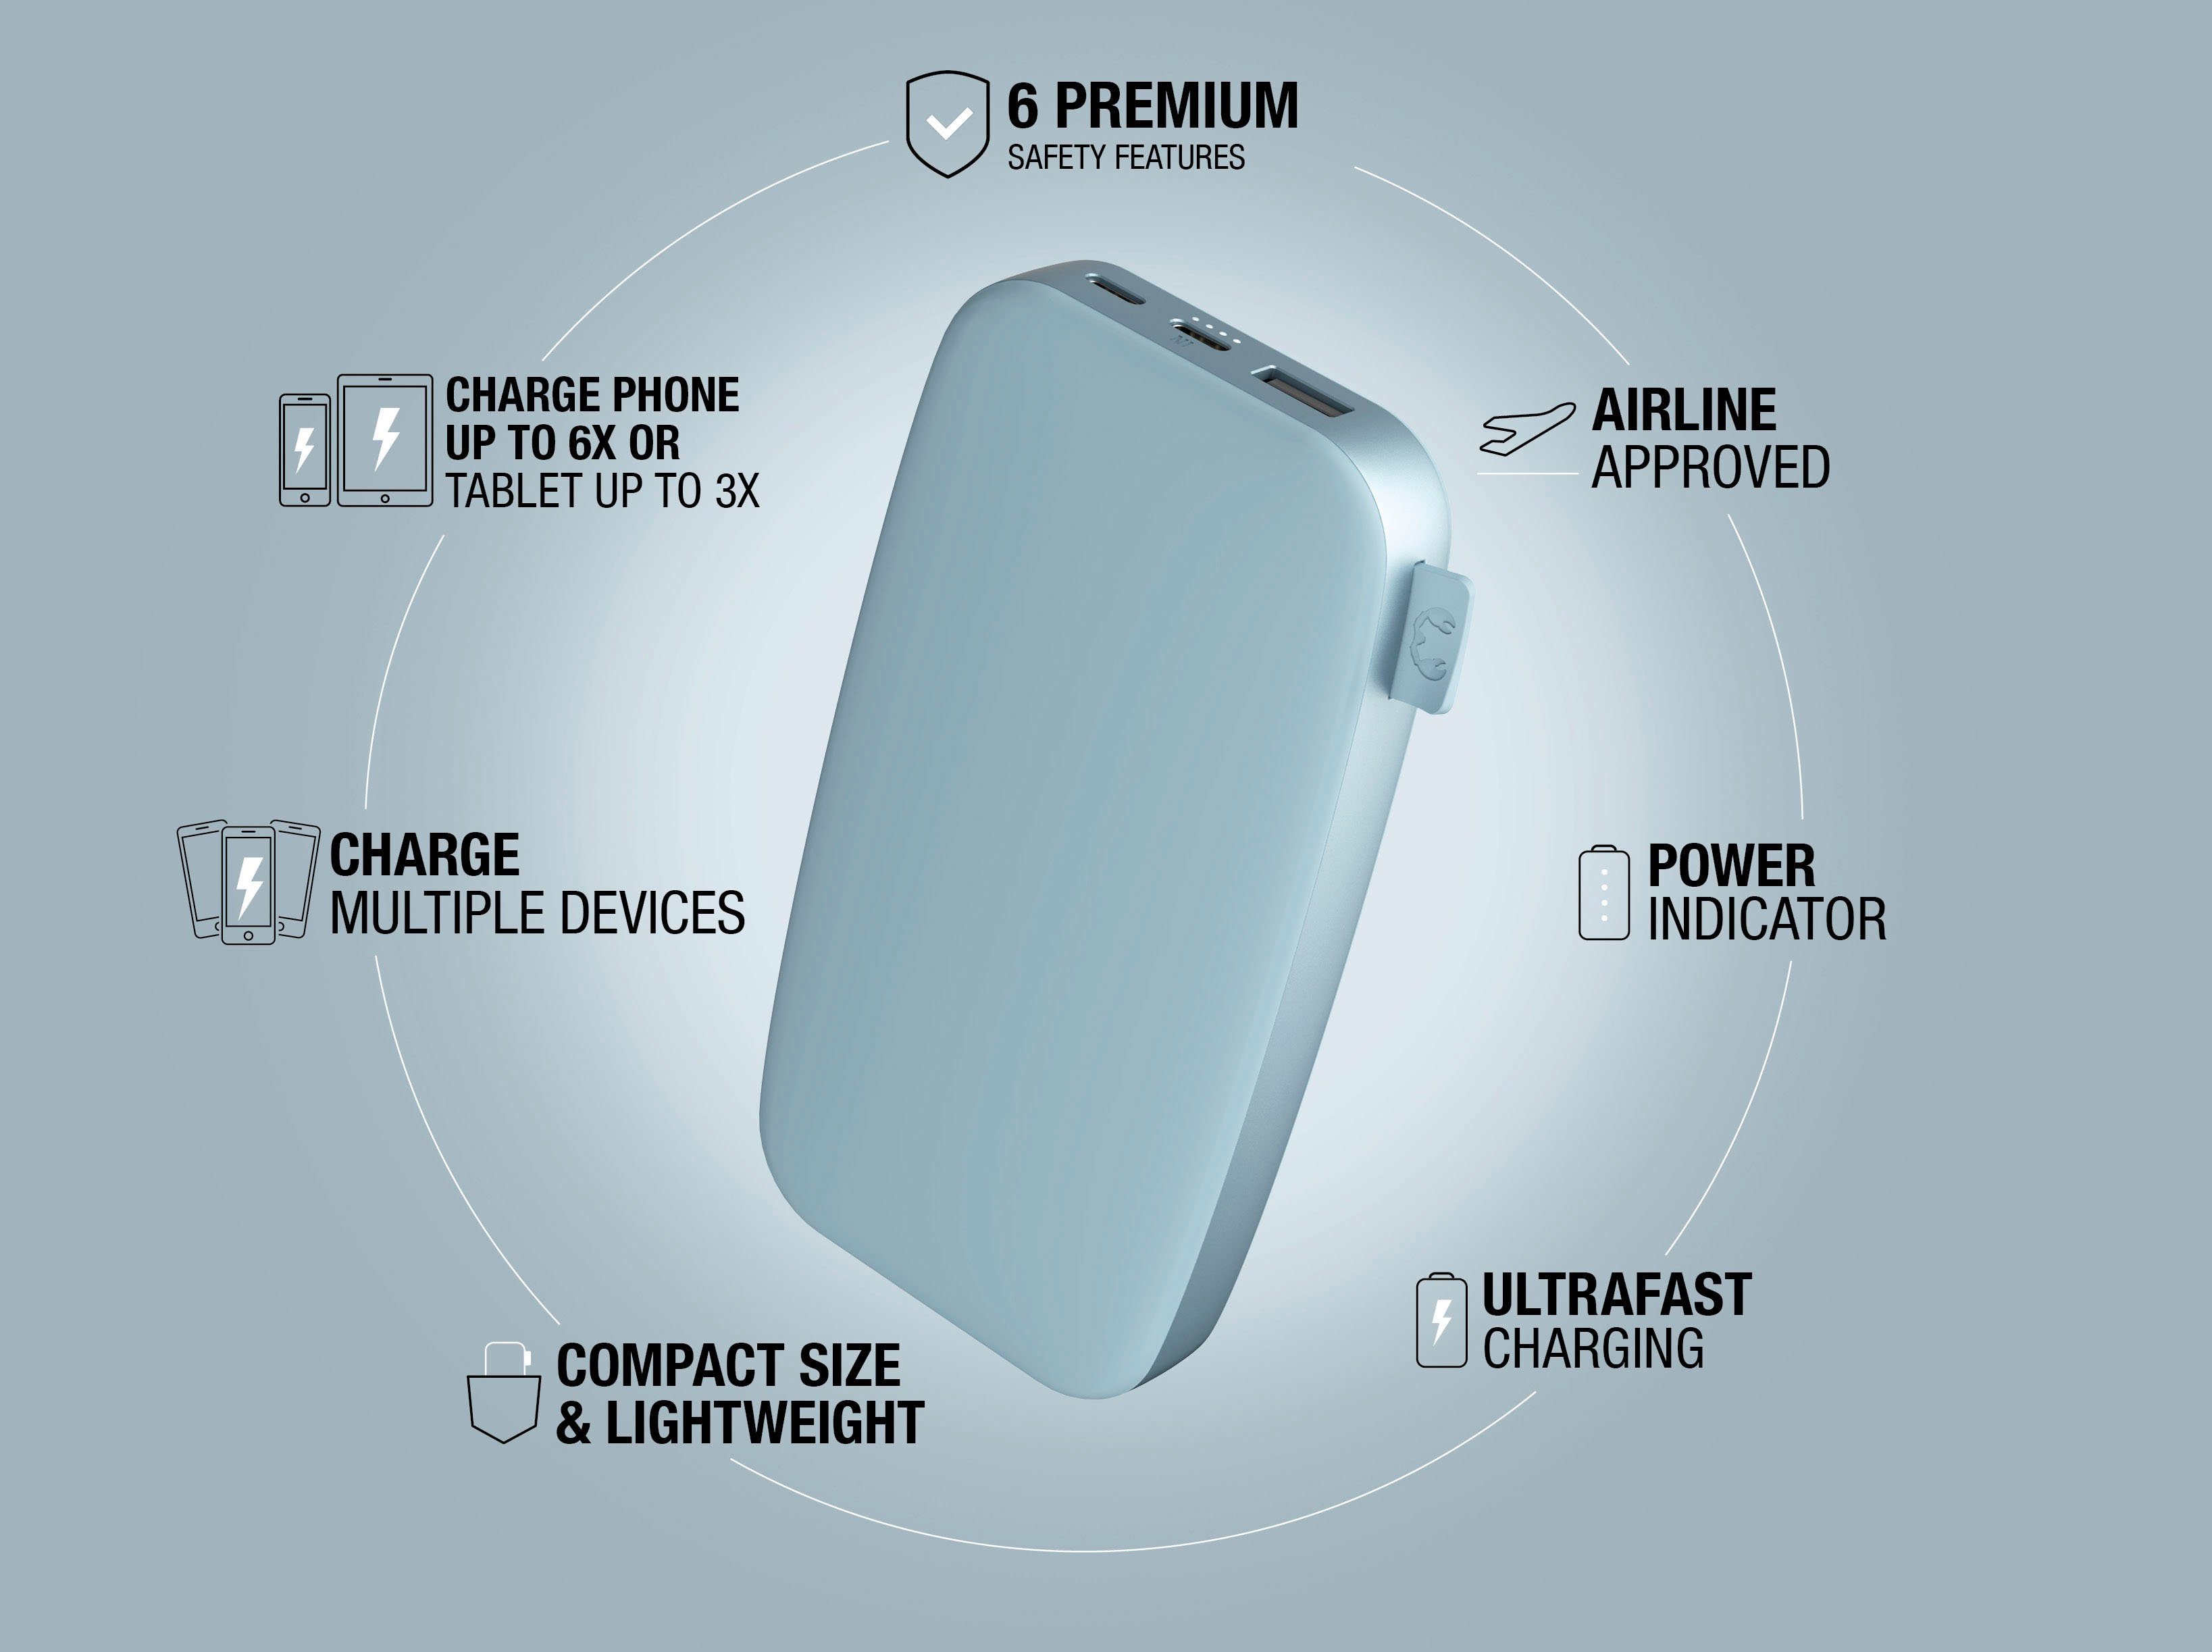 Pack 18000mAh Power PD hellblau Rebel Charge mit 20W Fresh´n Powerbank & Ultra USB-C, Fast